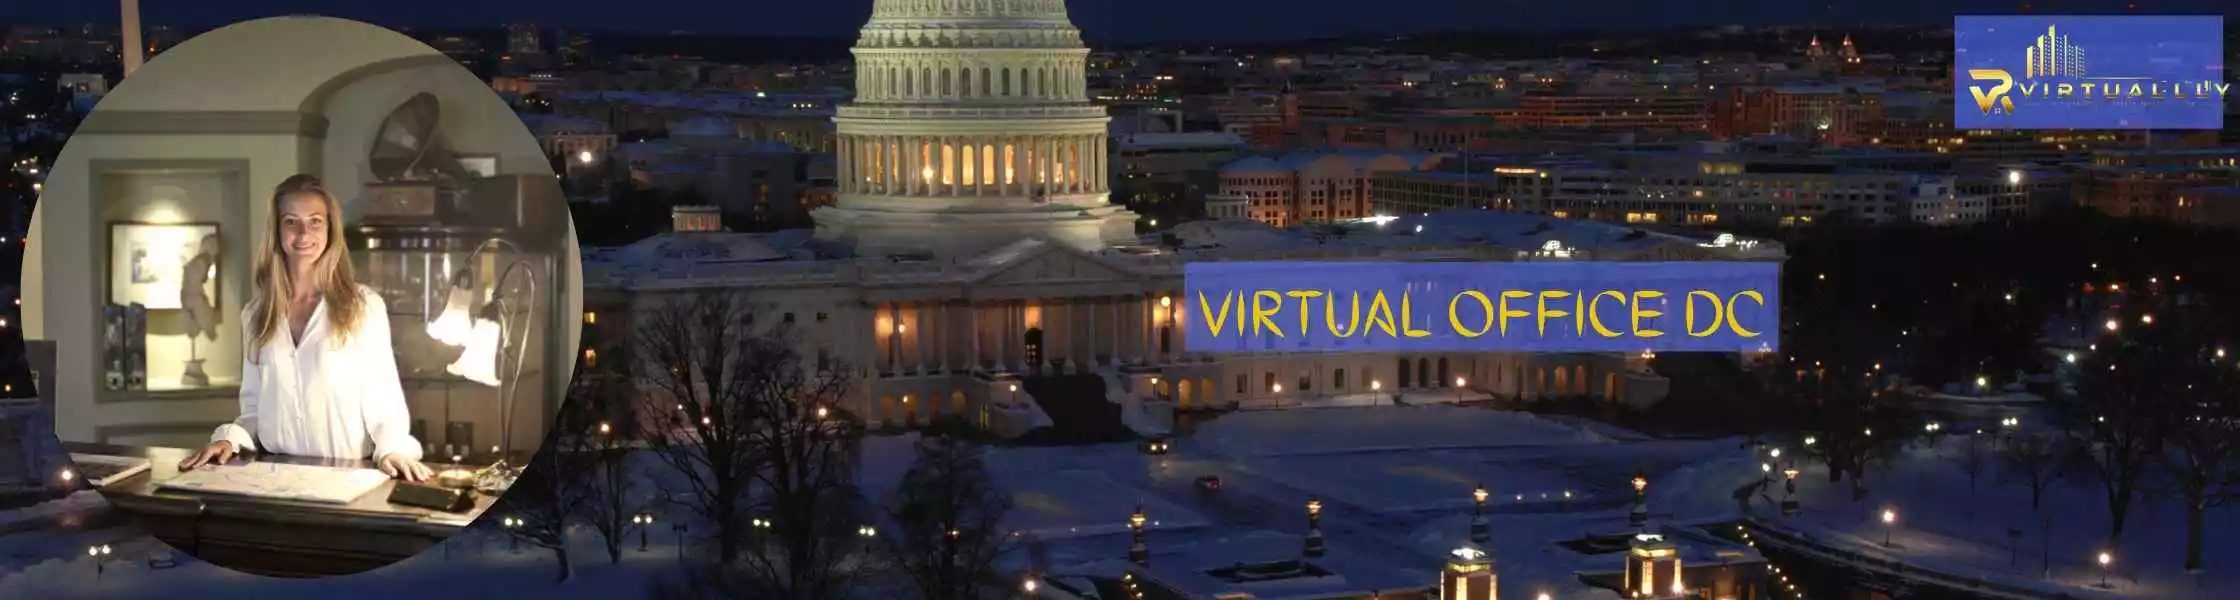 Super Affordable Virtual Office DC - Washington DC Address & More